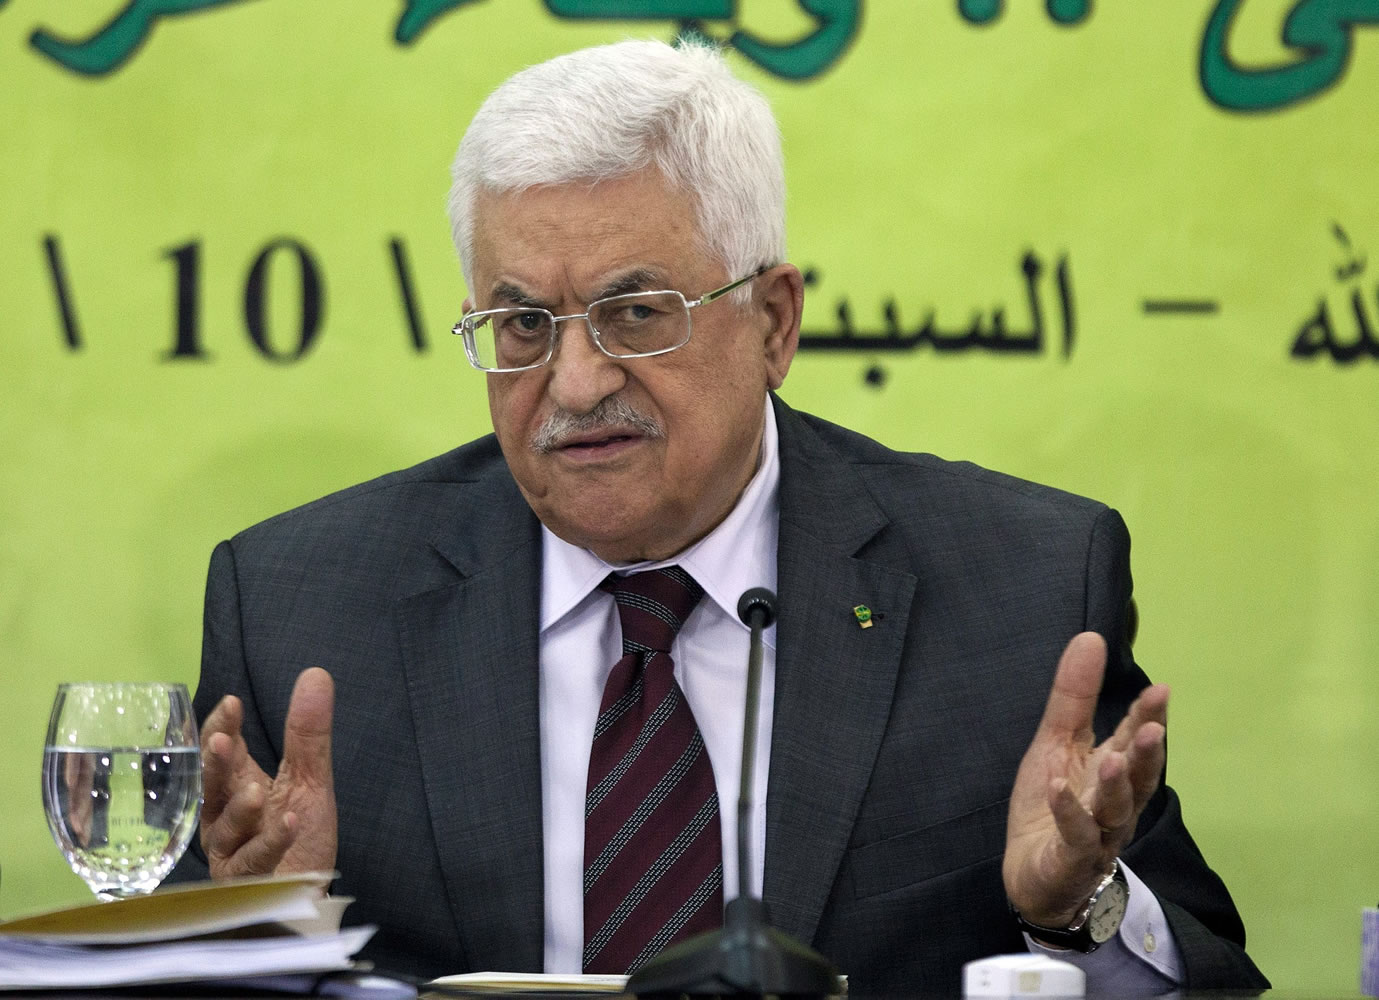 Mahmoud Abbas
Palestinian president